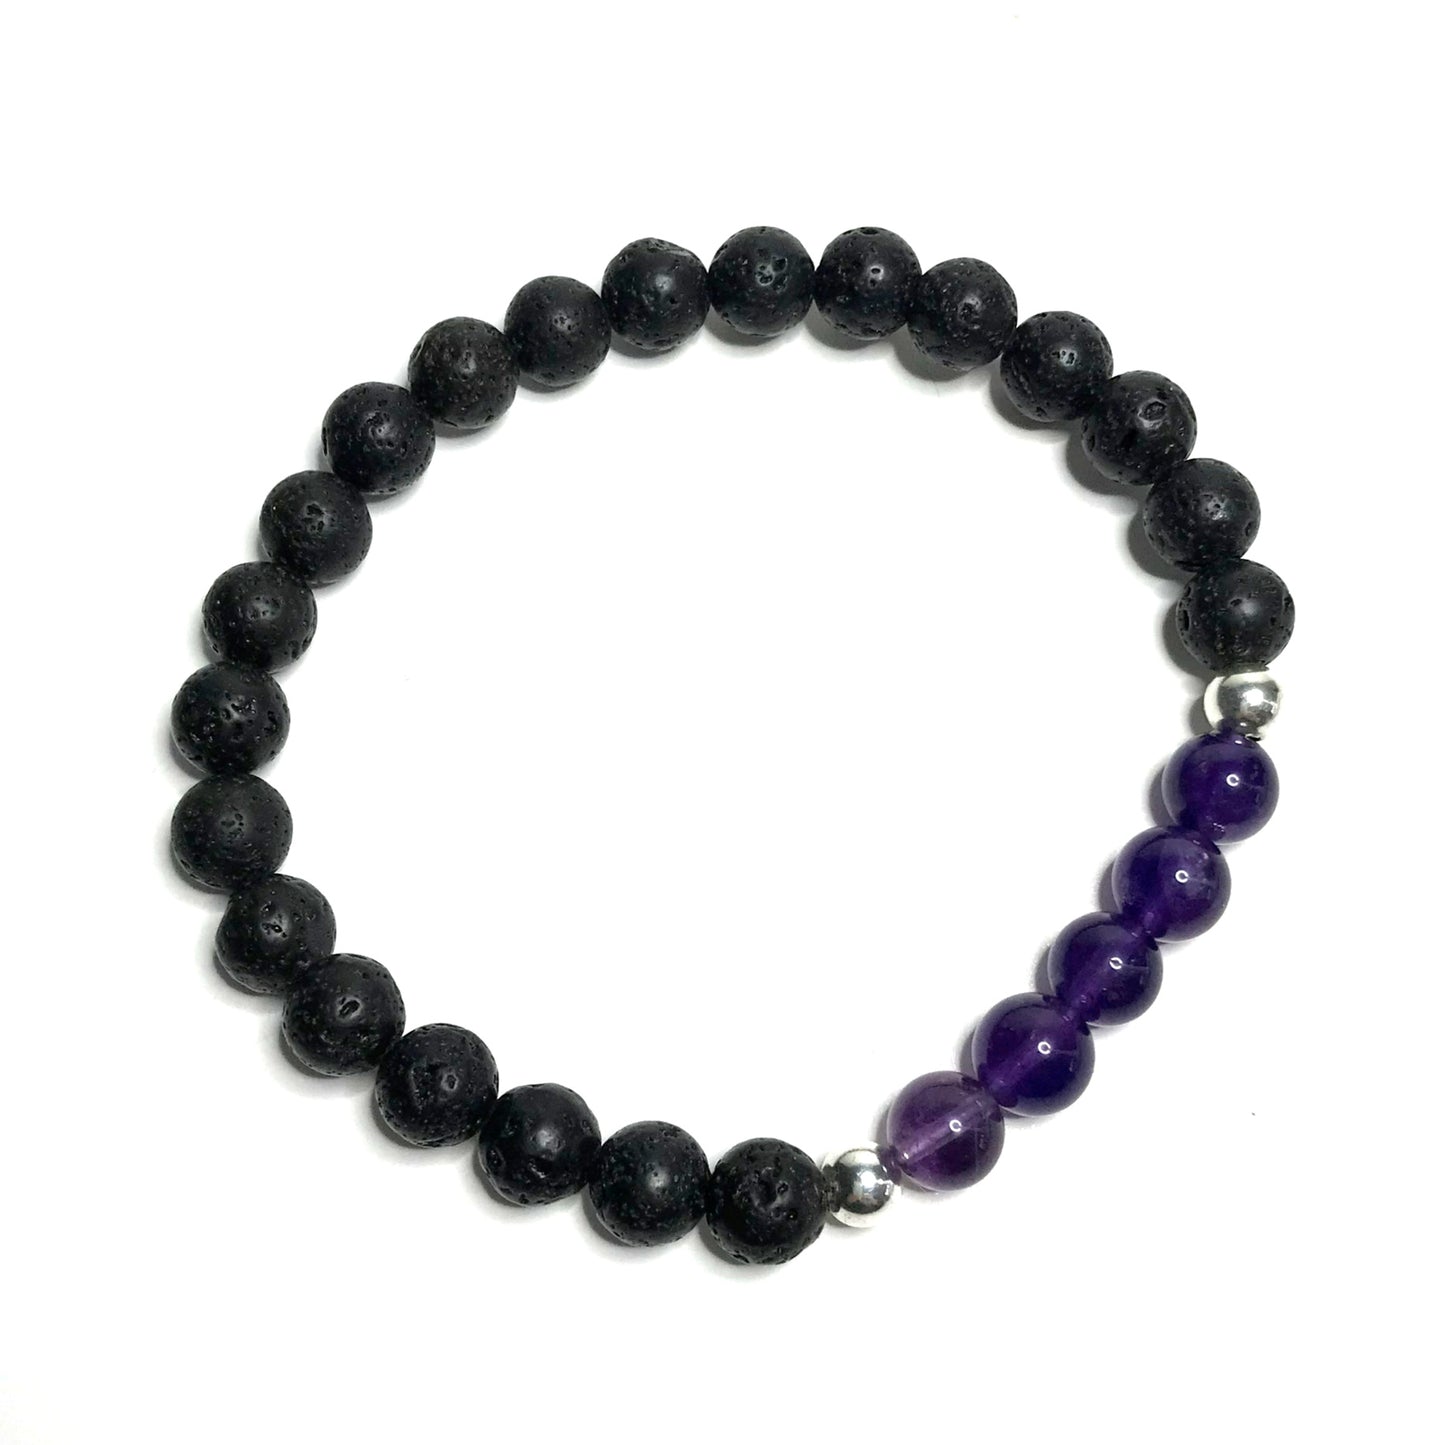 Lava stone and purple gemstone beaded bracelet